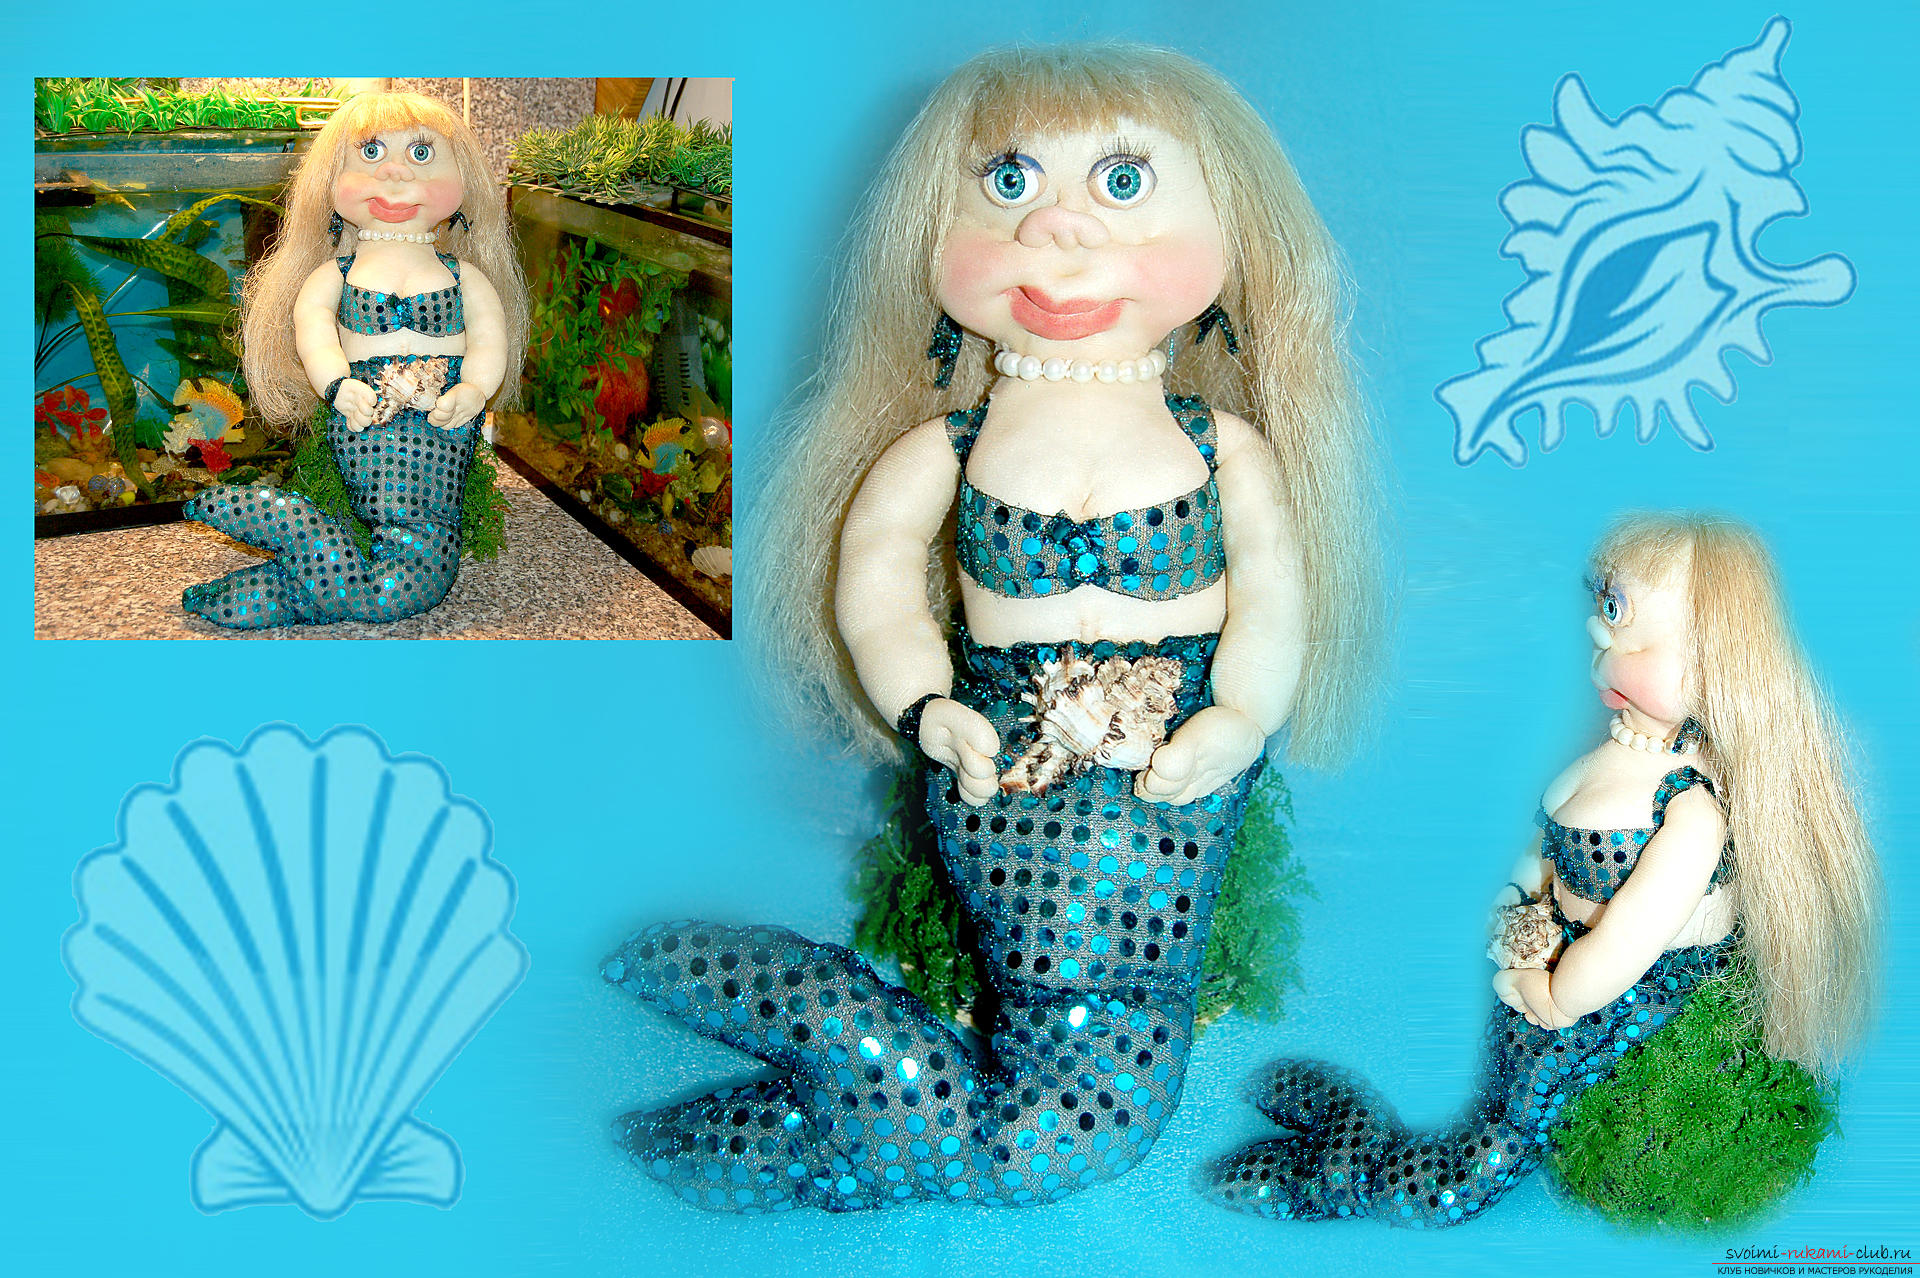 Interior doll: the little mermaid. Photo №1